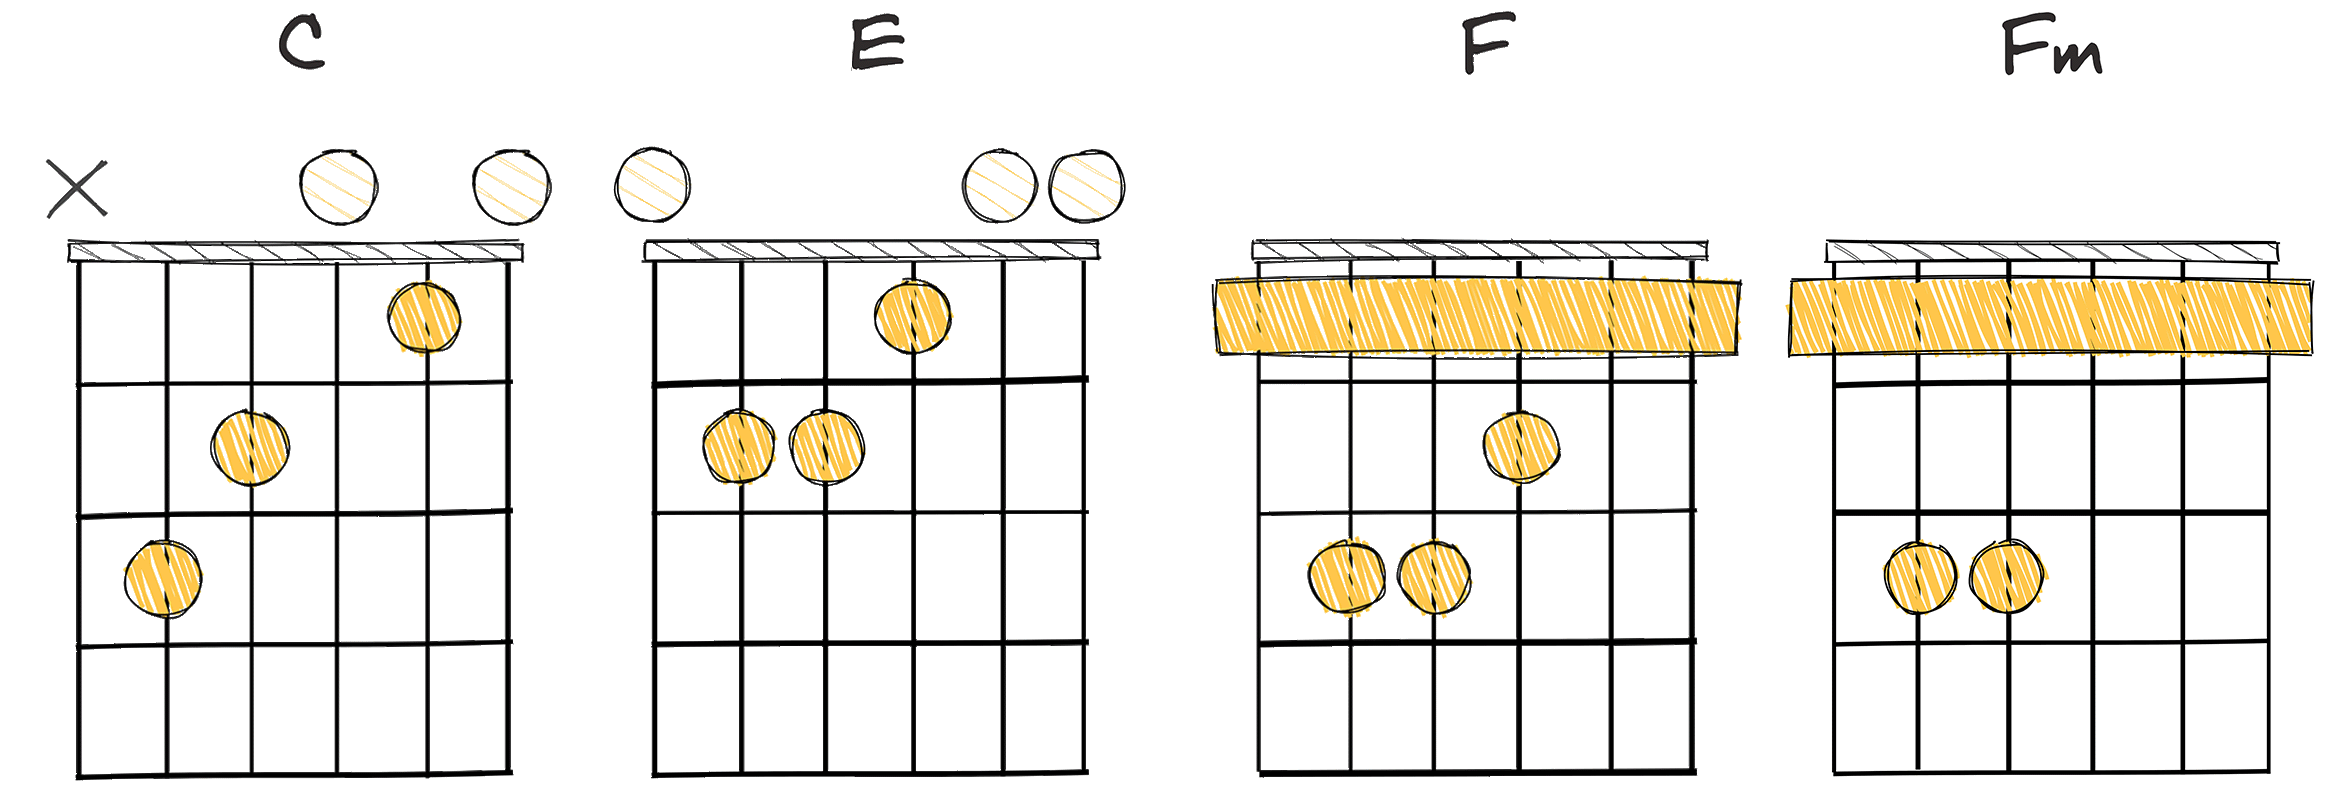 I-III-IV-iv (1-3-4-4m) chords diagram